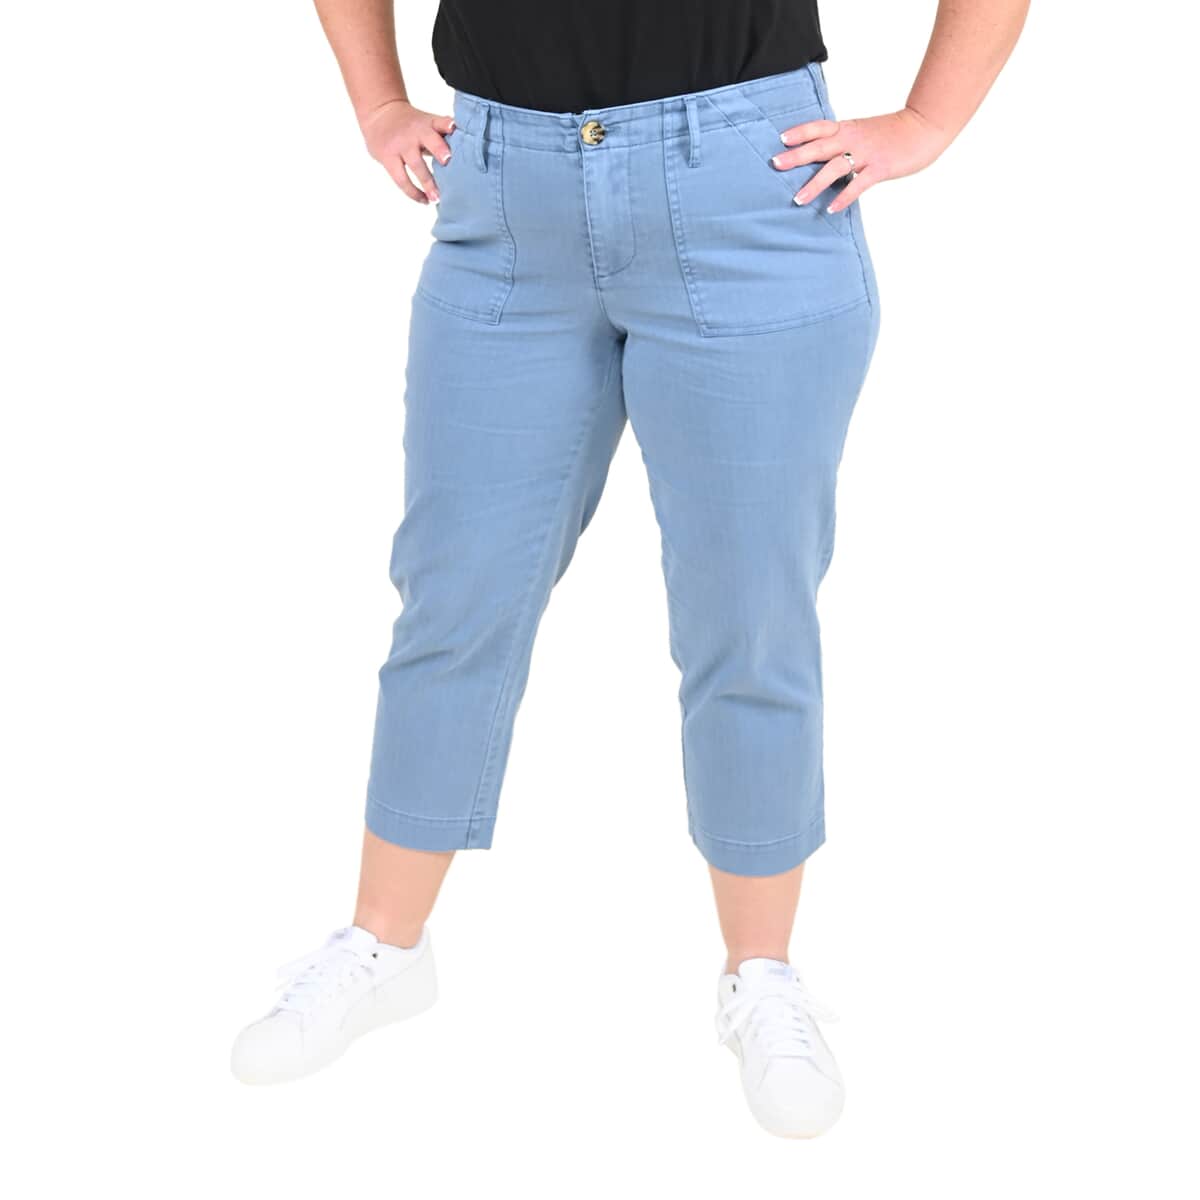 Buy Halston White Denim Skinny High Waist Jeans - Size 8 at ShopLC.